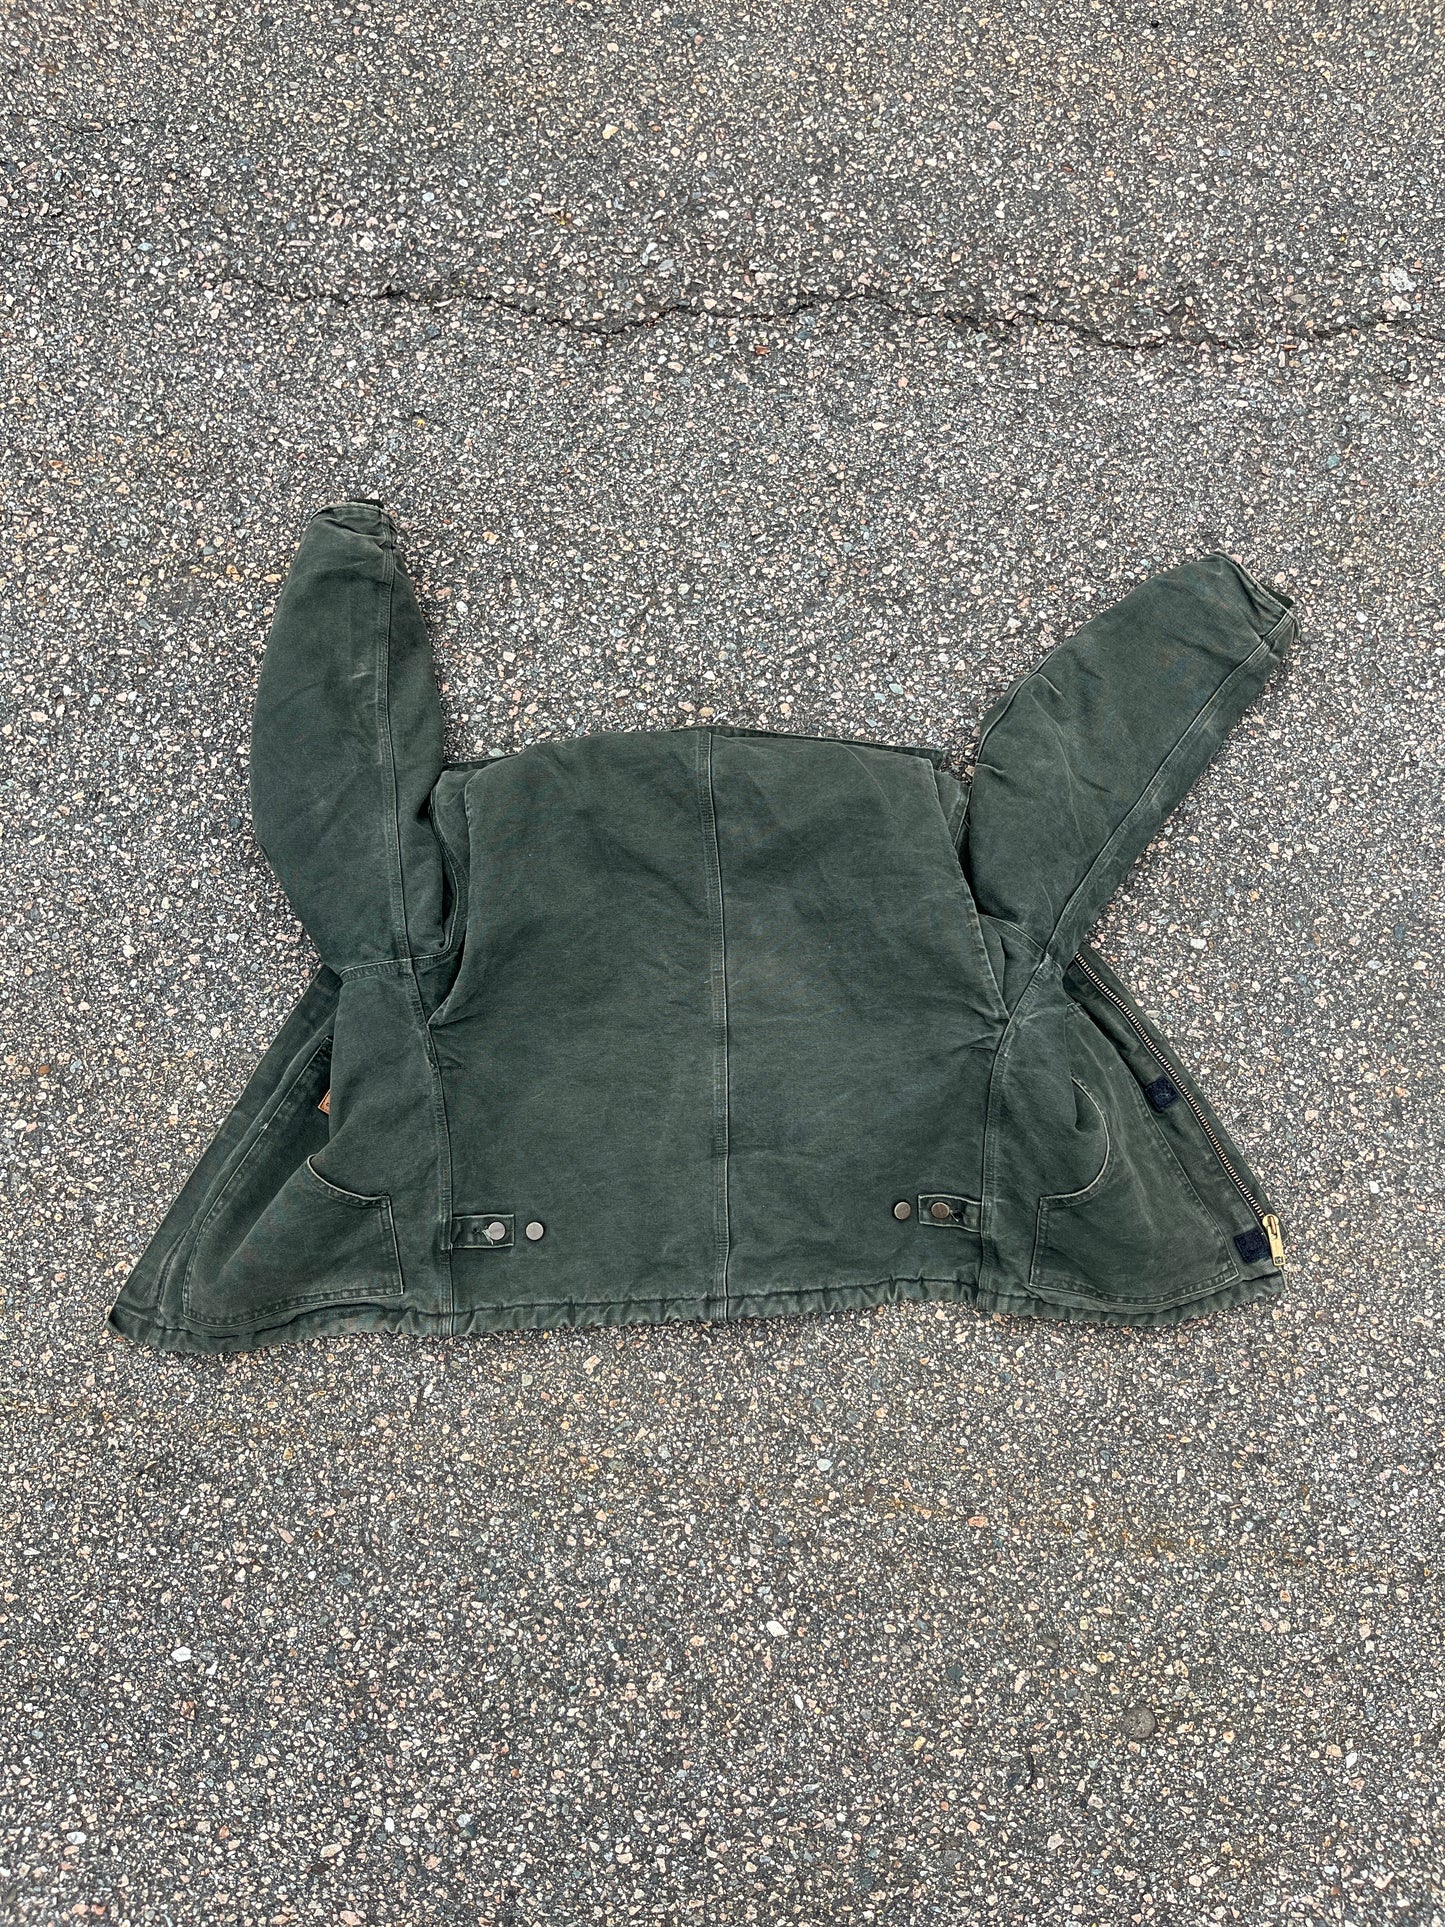 Faded Olive Green Carhartt Arctic Jacket - Medium